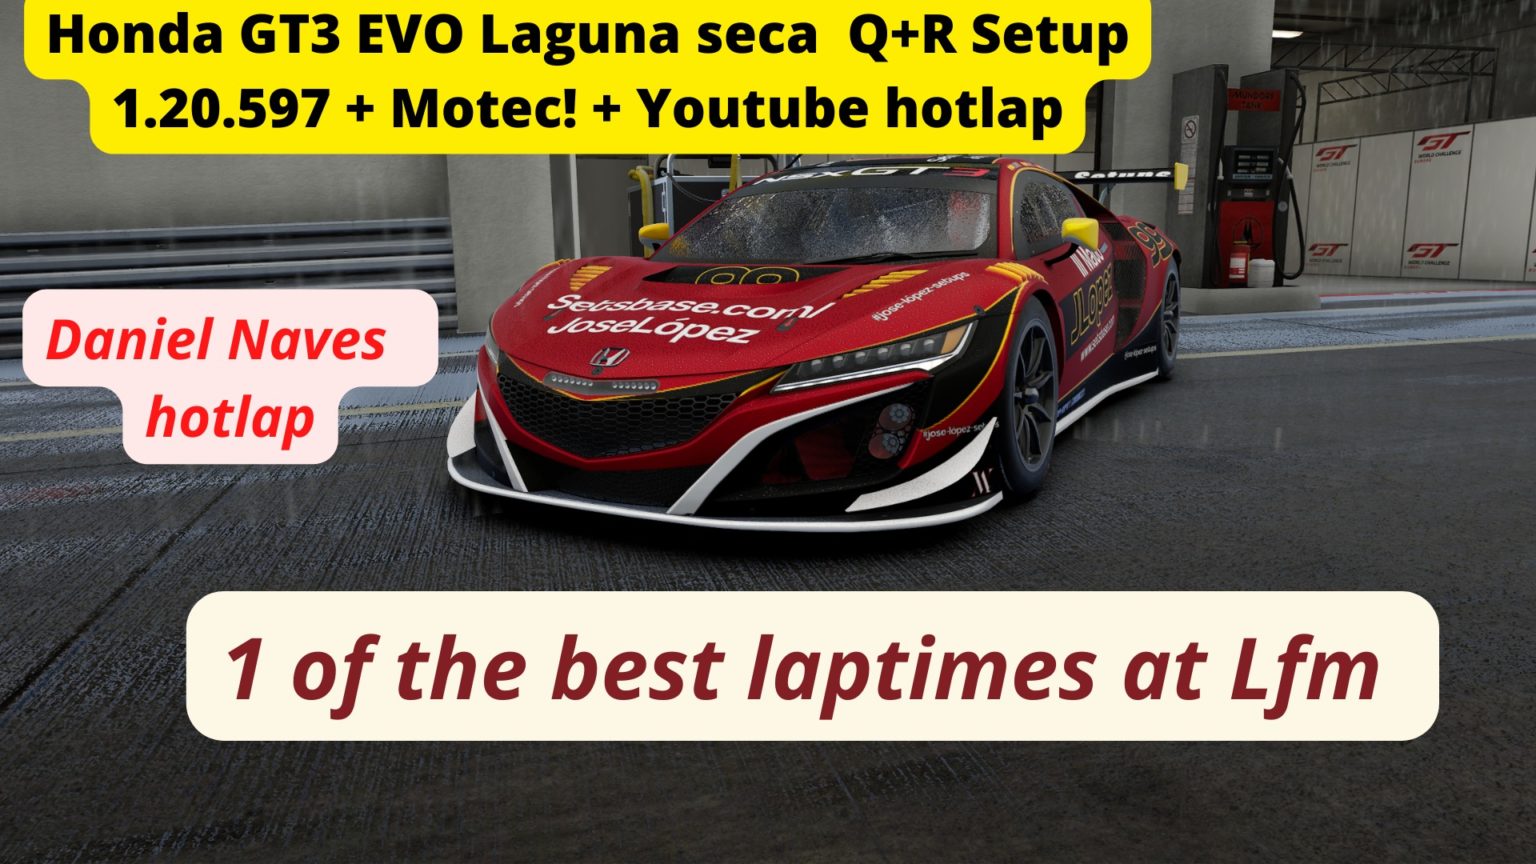 Honda Nsx Gt Evo Laguna Seca Hotlap R Q Setups Motec Files Vers